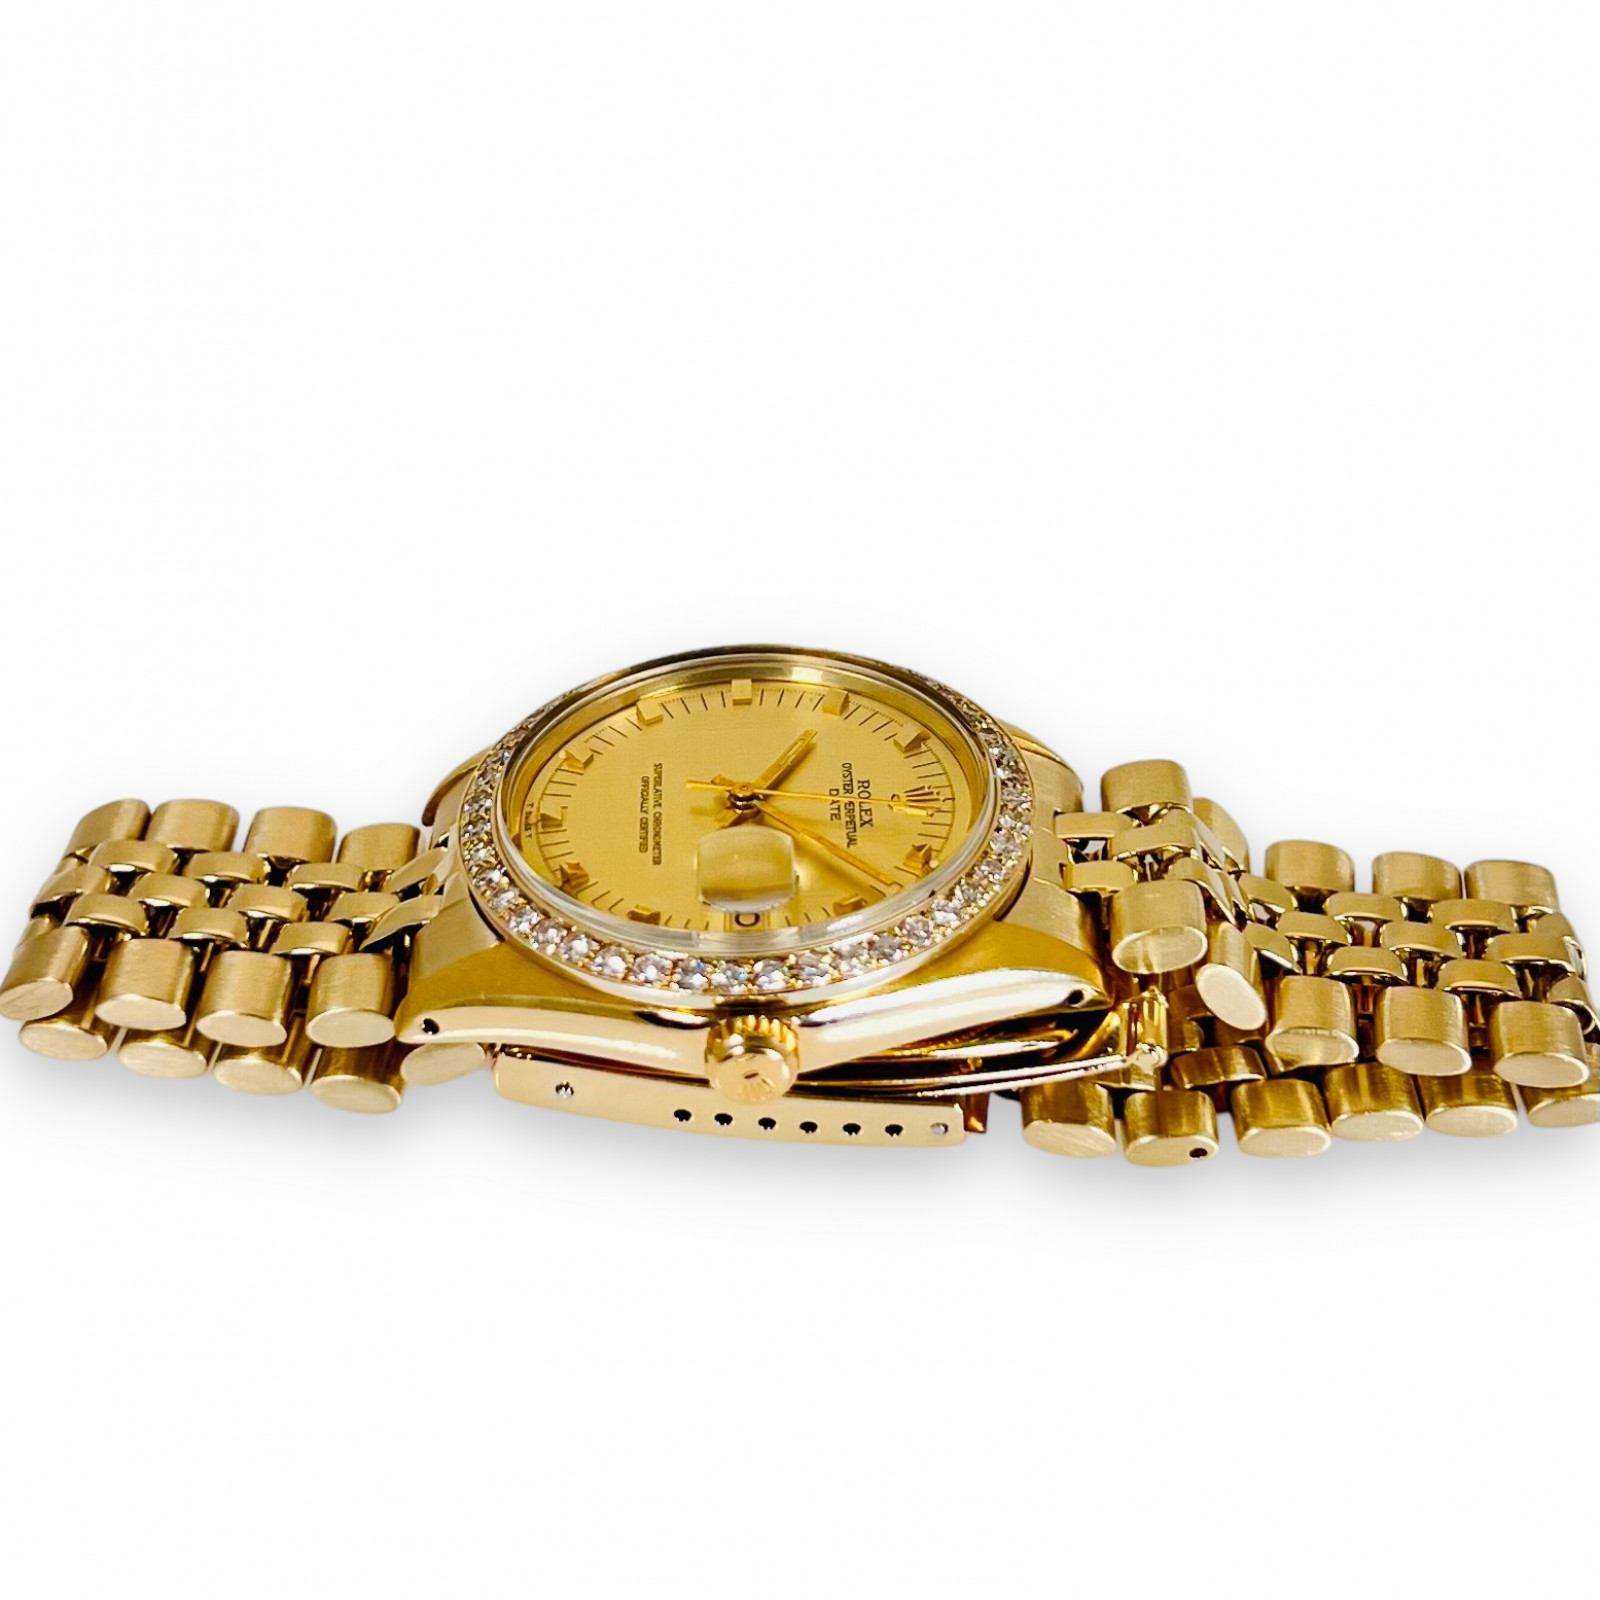 Rolex Date Ref. 1503 14KT Gold.